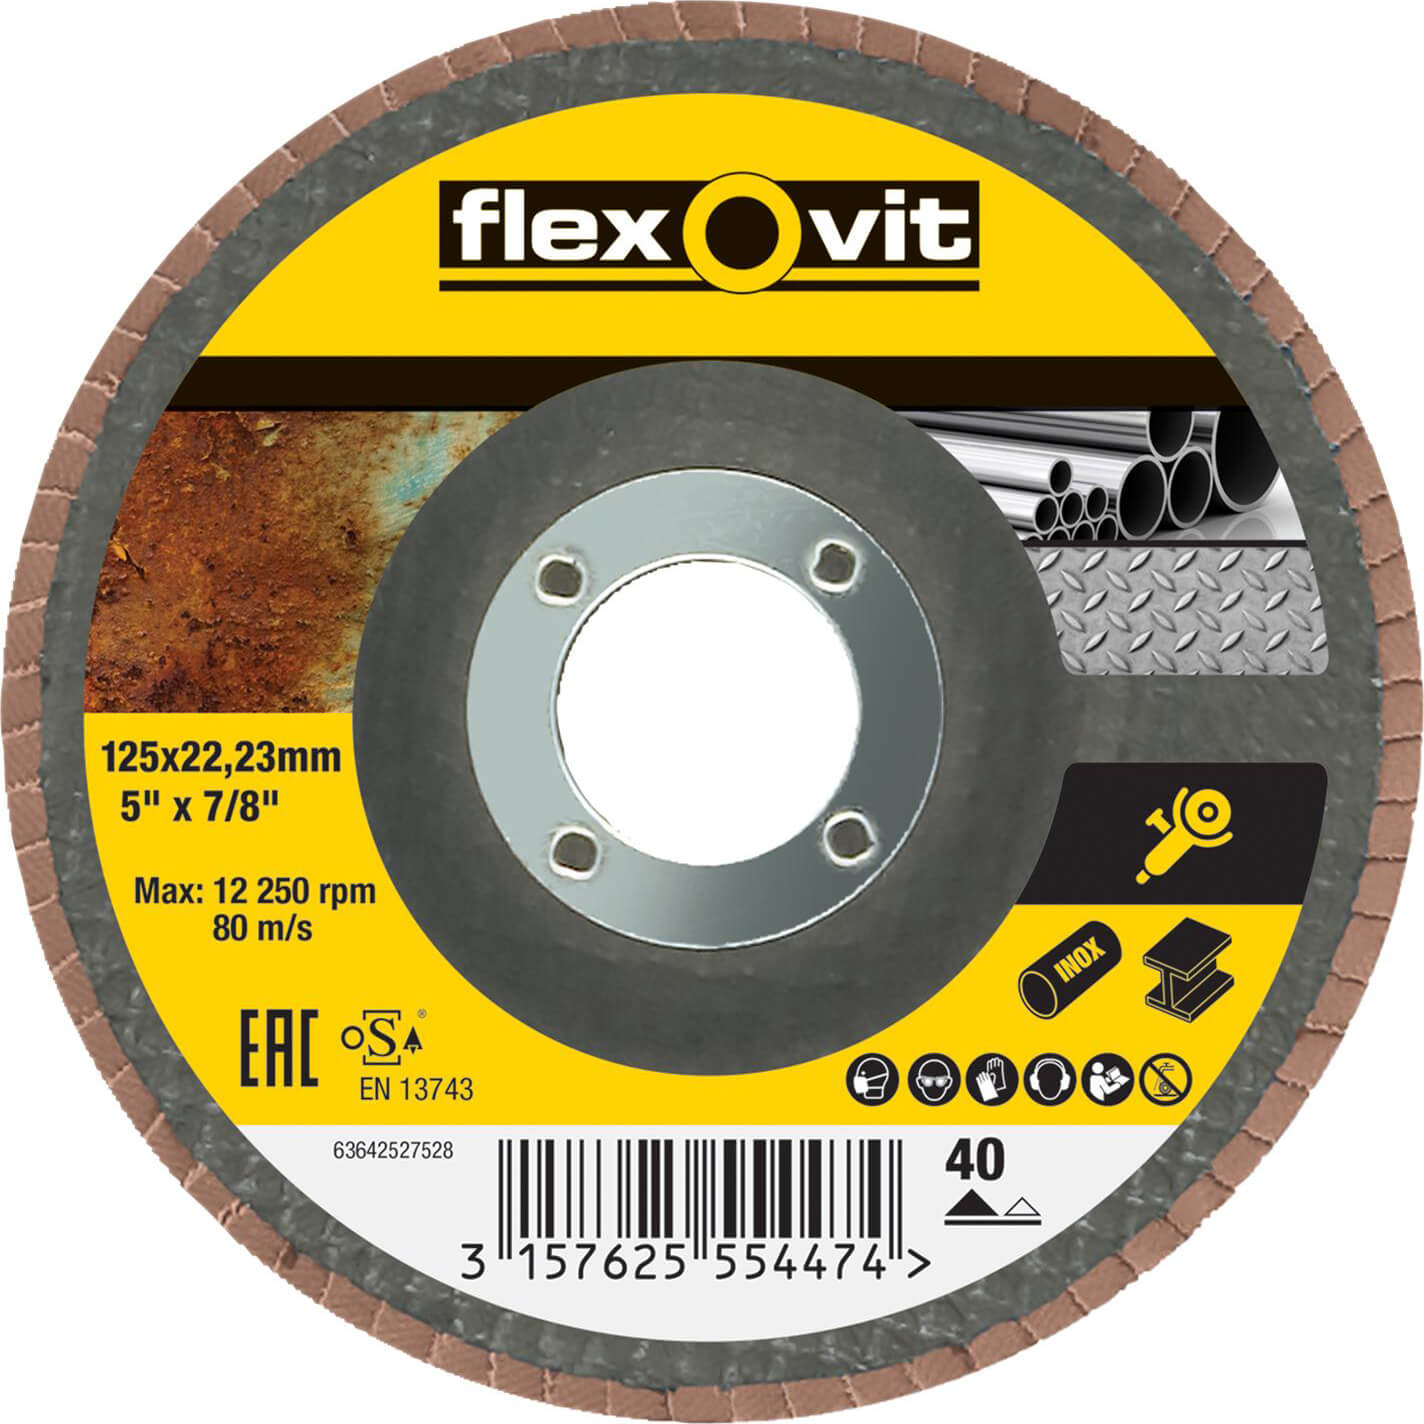 Photos - Cutting Disc Flexovit Abrasive Flap Disc 125mm 40g 27528 